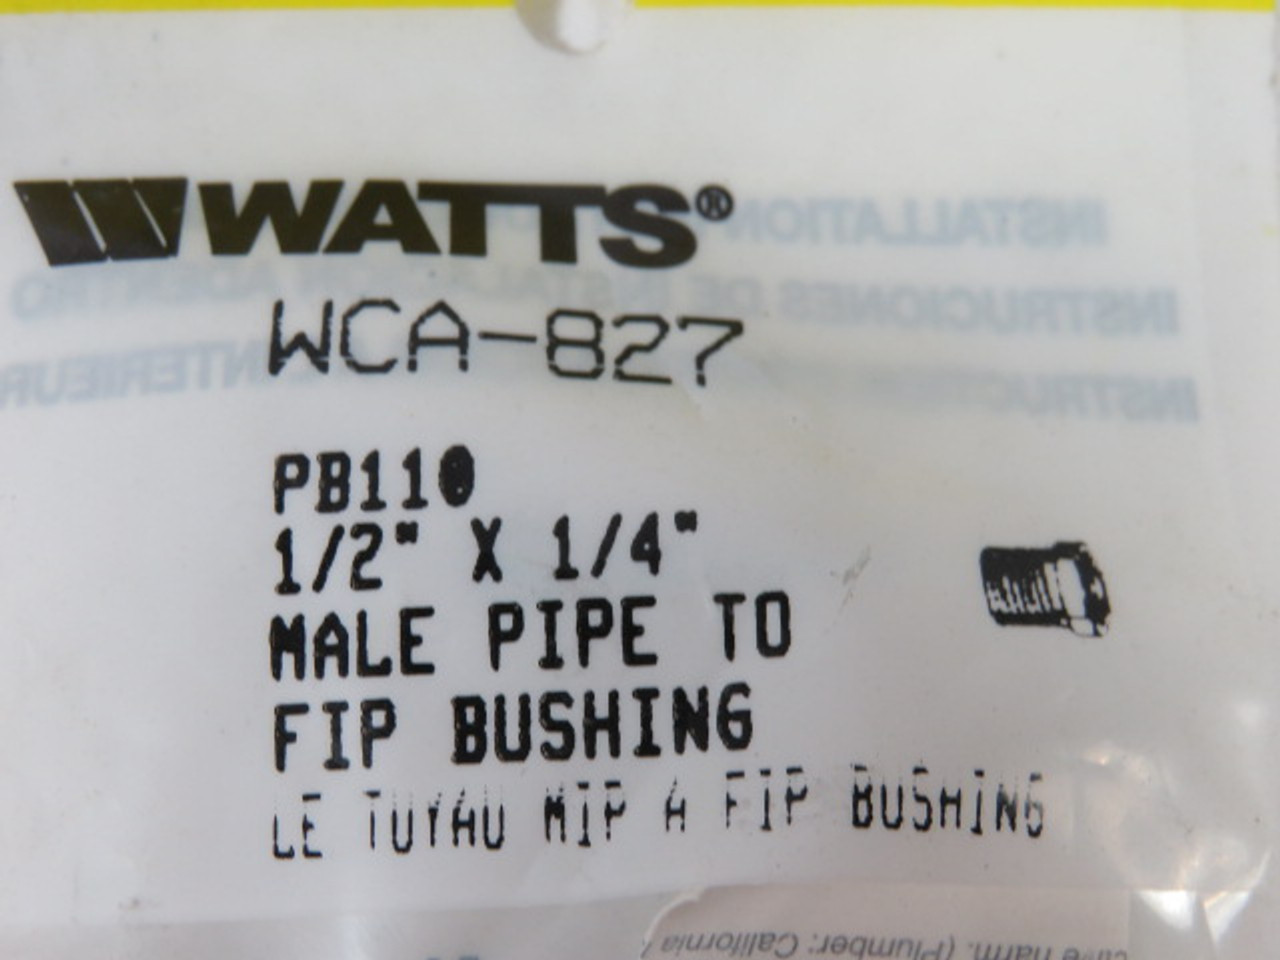 Watts PB110-WCA-827 1/2"x1/4" Pipe to FIP Bushing 1" ! NEW !